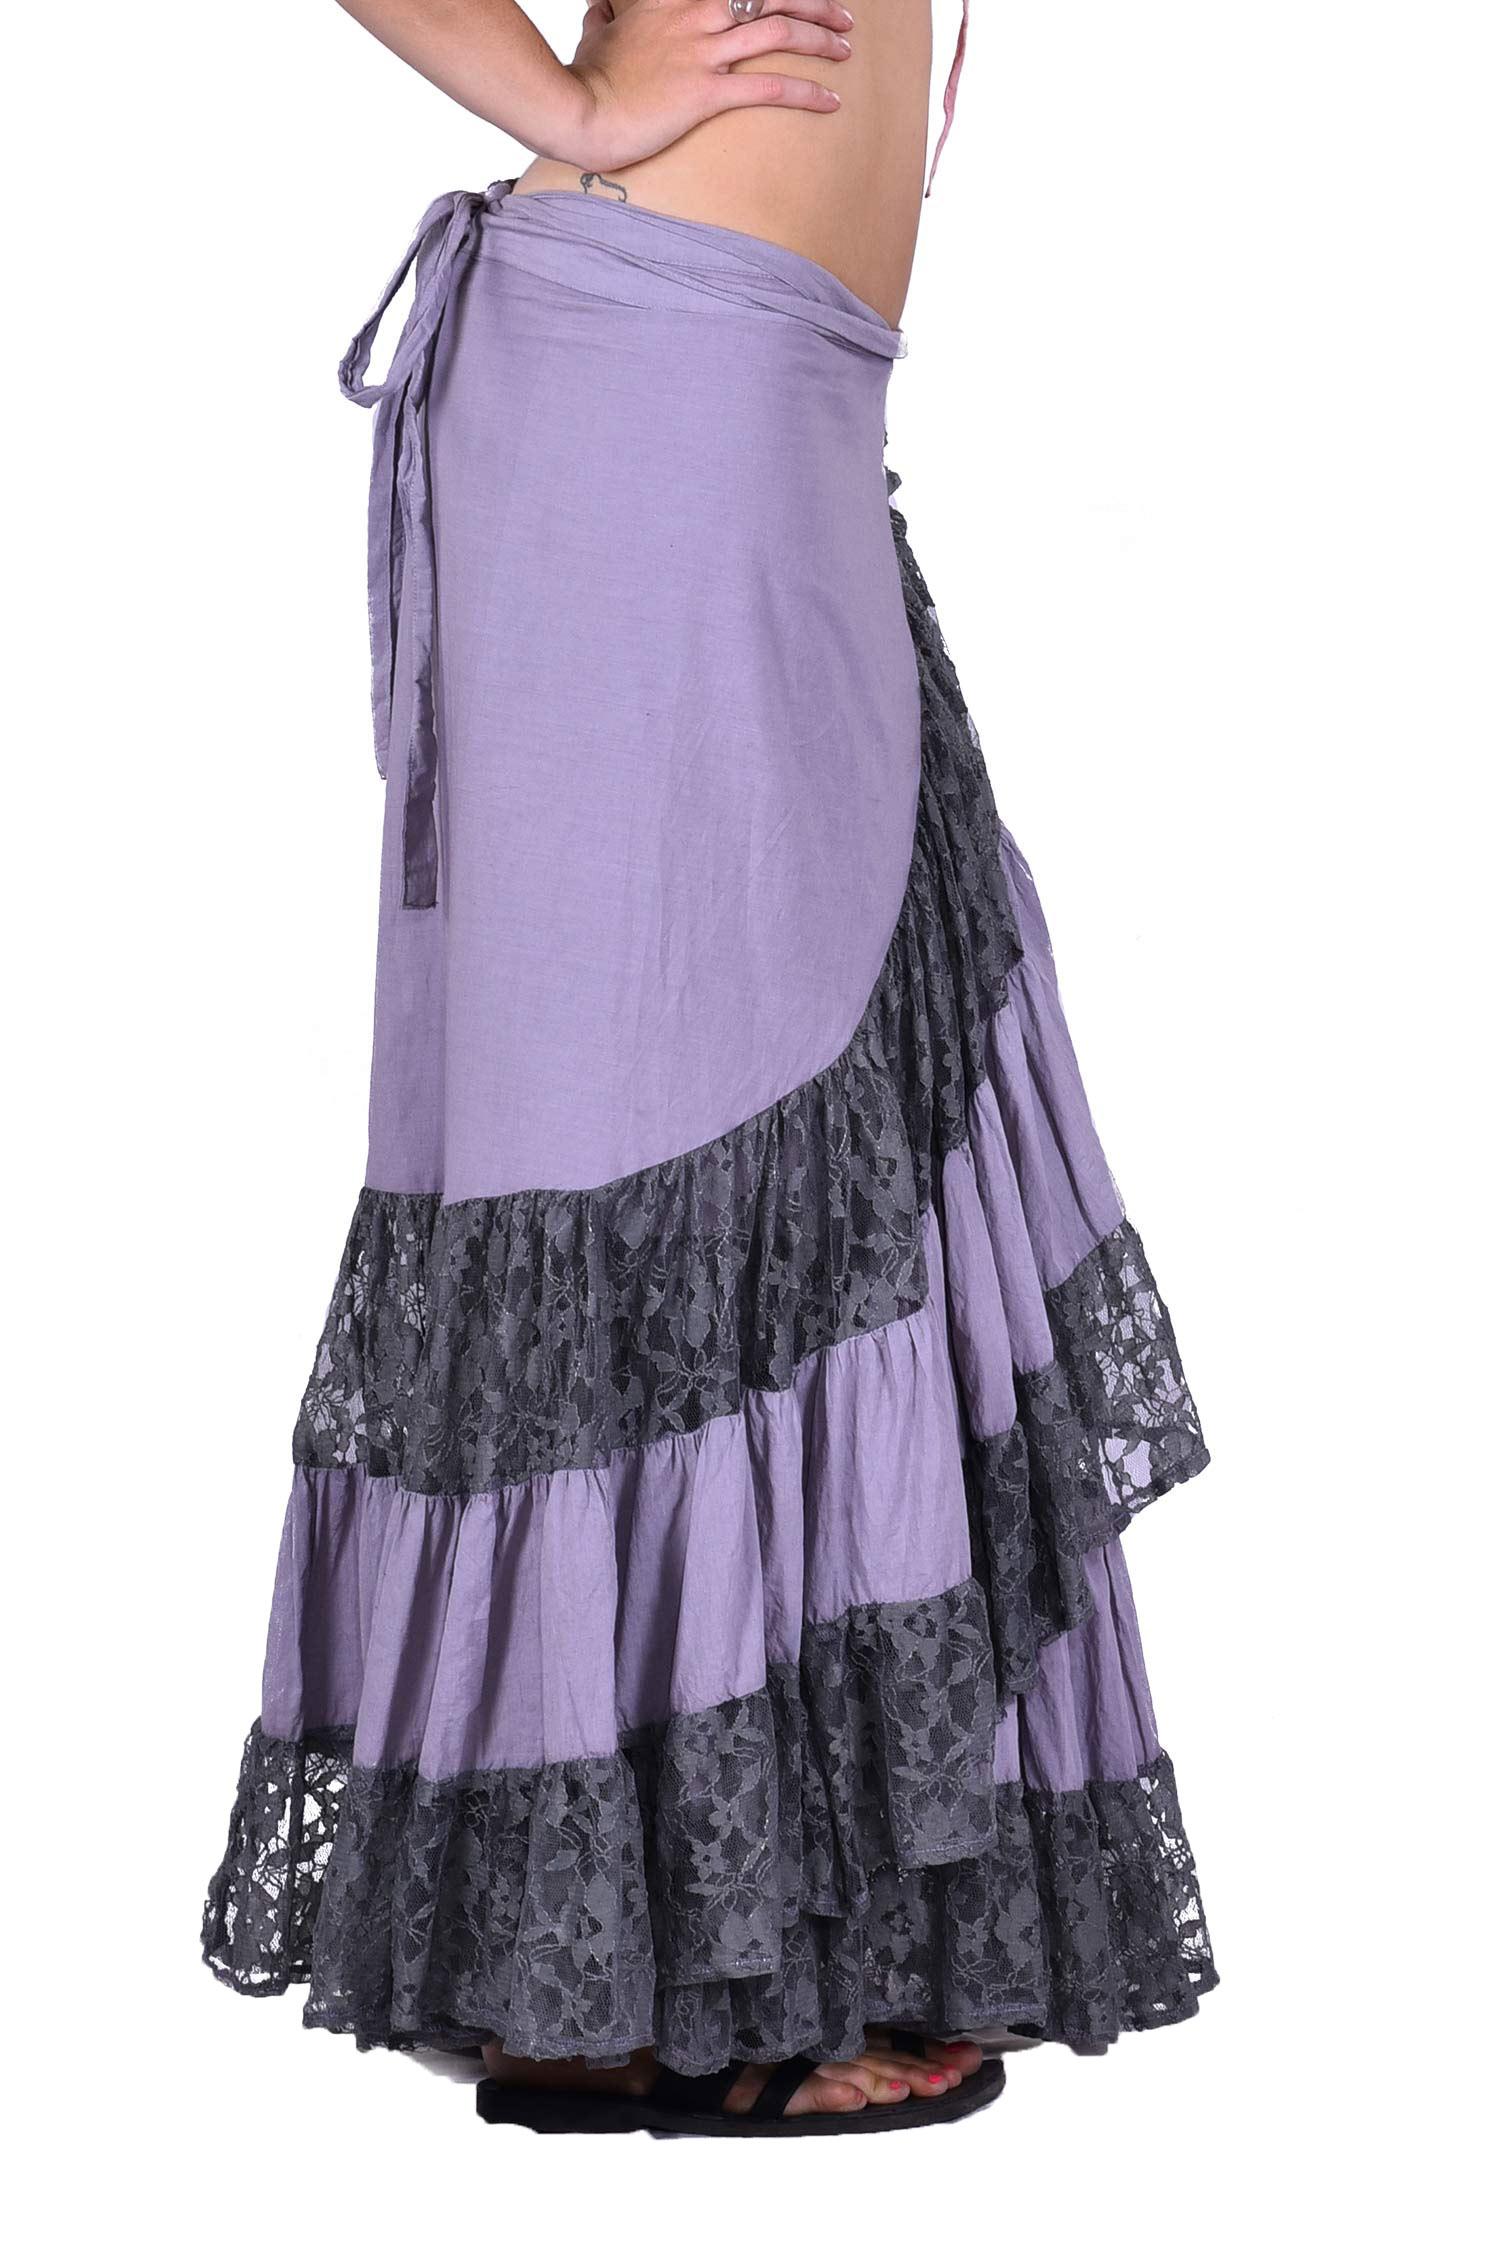 Long Gypsy Skirts For Women - Nehru Memorial